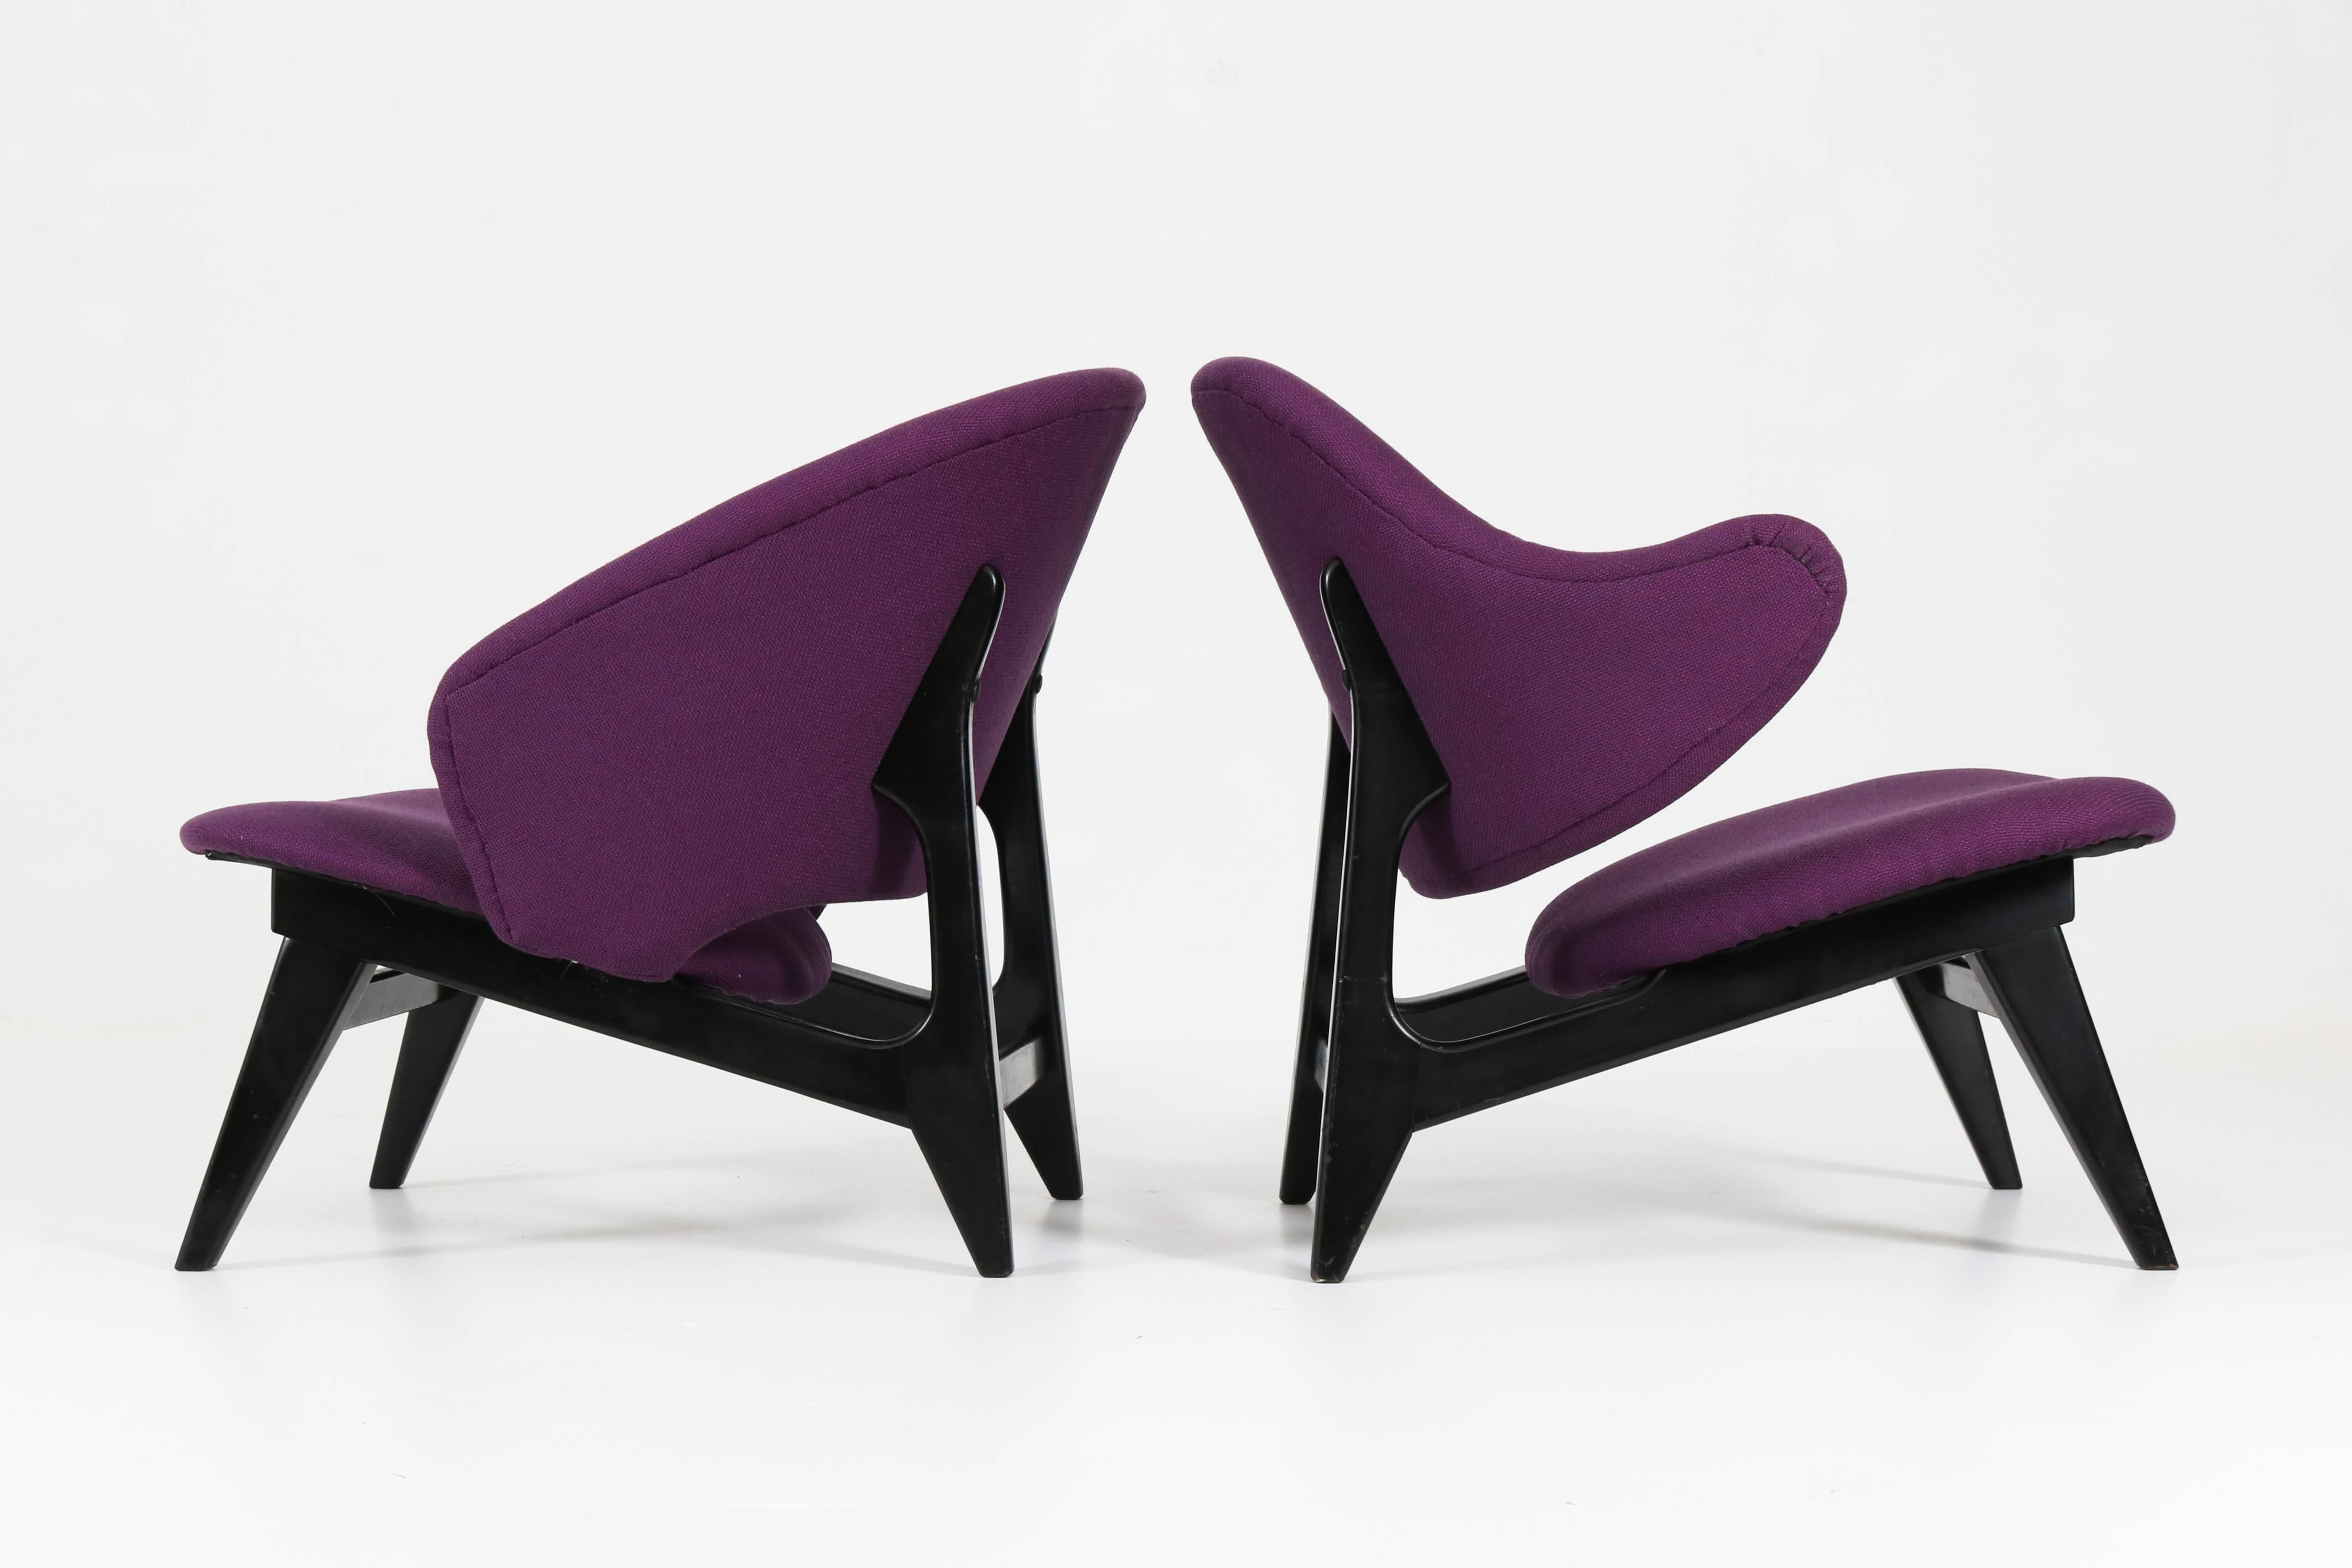 Wood Mid-Century Modern Lounge Chair by Louis Van Teeffelen for Webe, 1960s